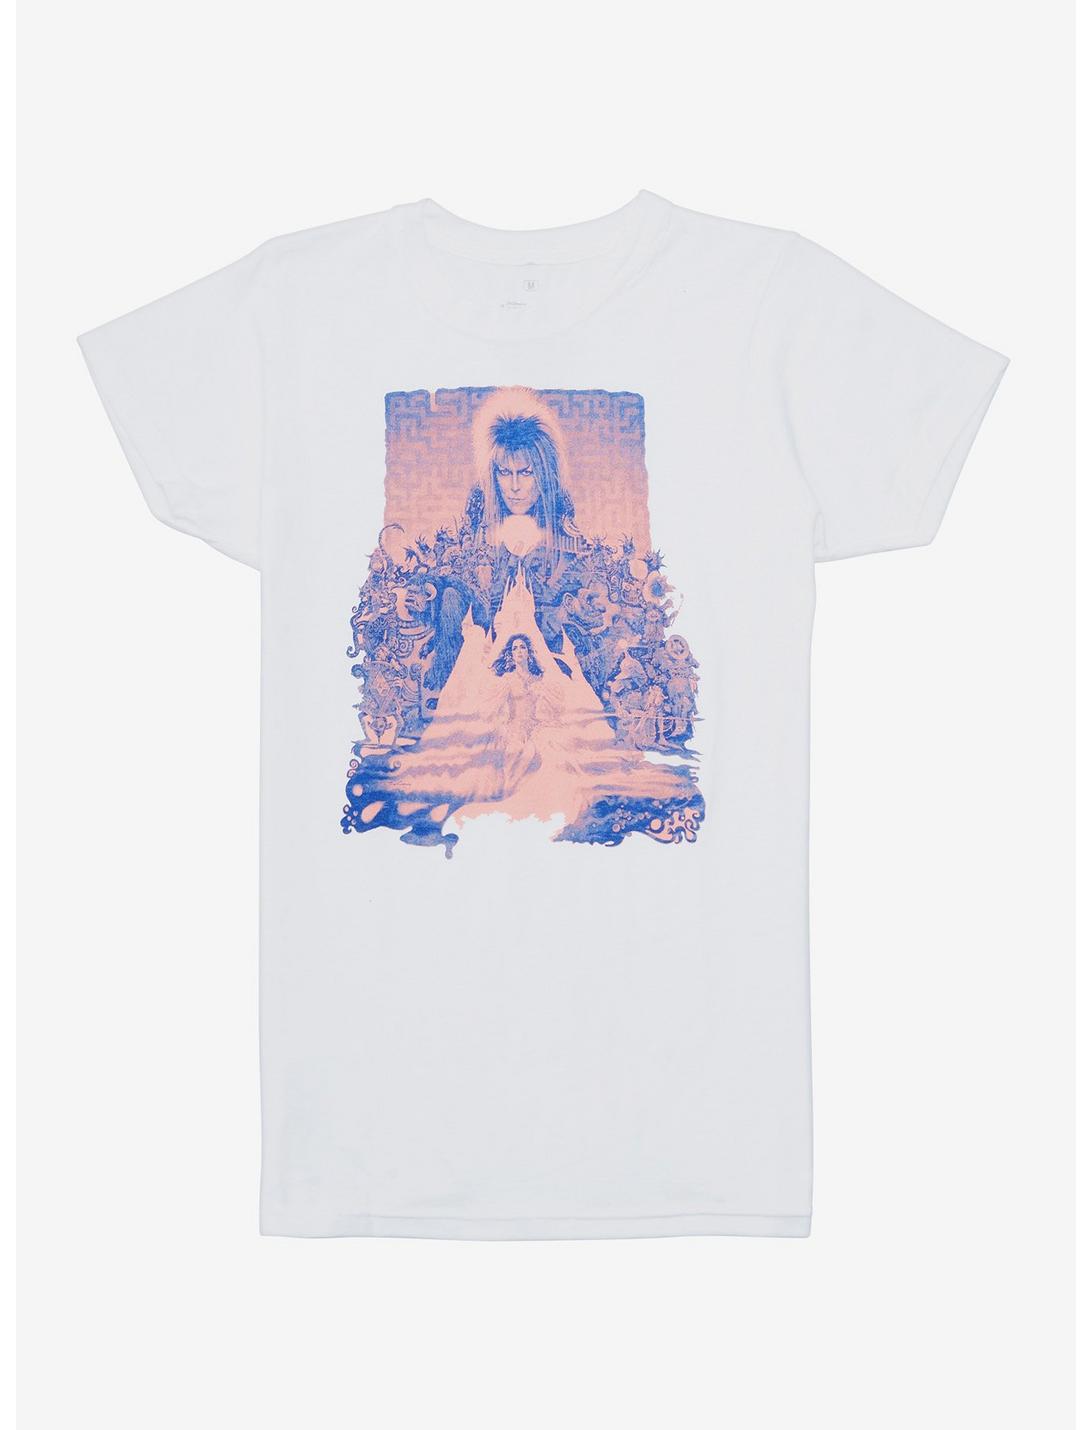 Labyrinth Pink & Blue Poster Boyfriend Fit Girls T-Shirt Plus Size, MULTI, hi-res